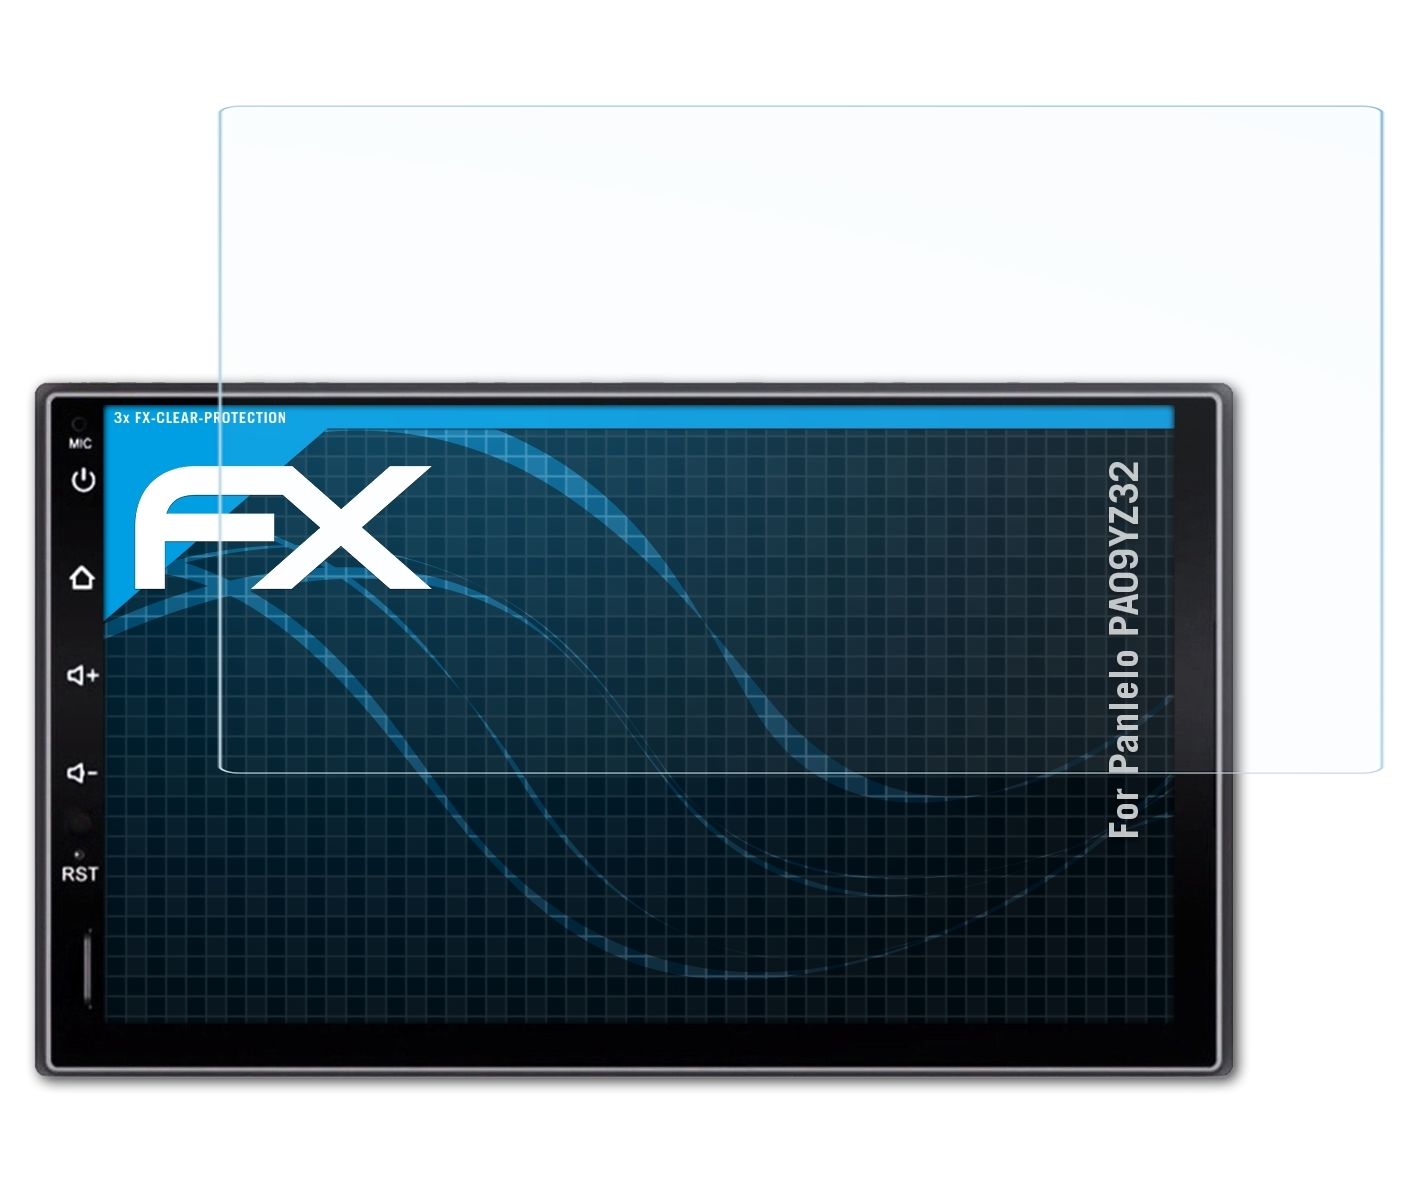 ATFOLIX 3x PA09YZ32) Displayschutz(für FX-Clear Panlelo